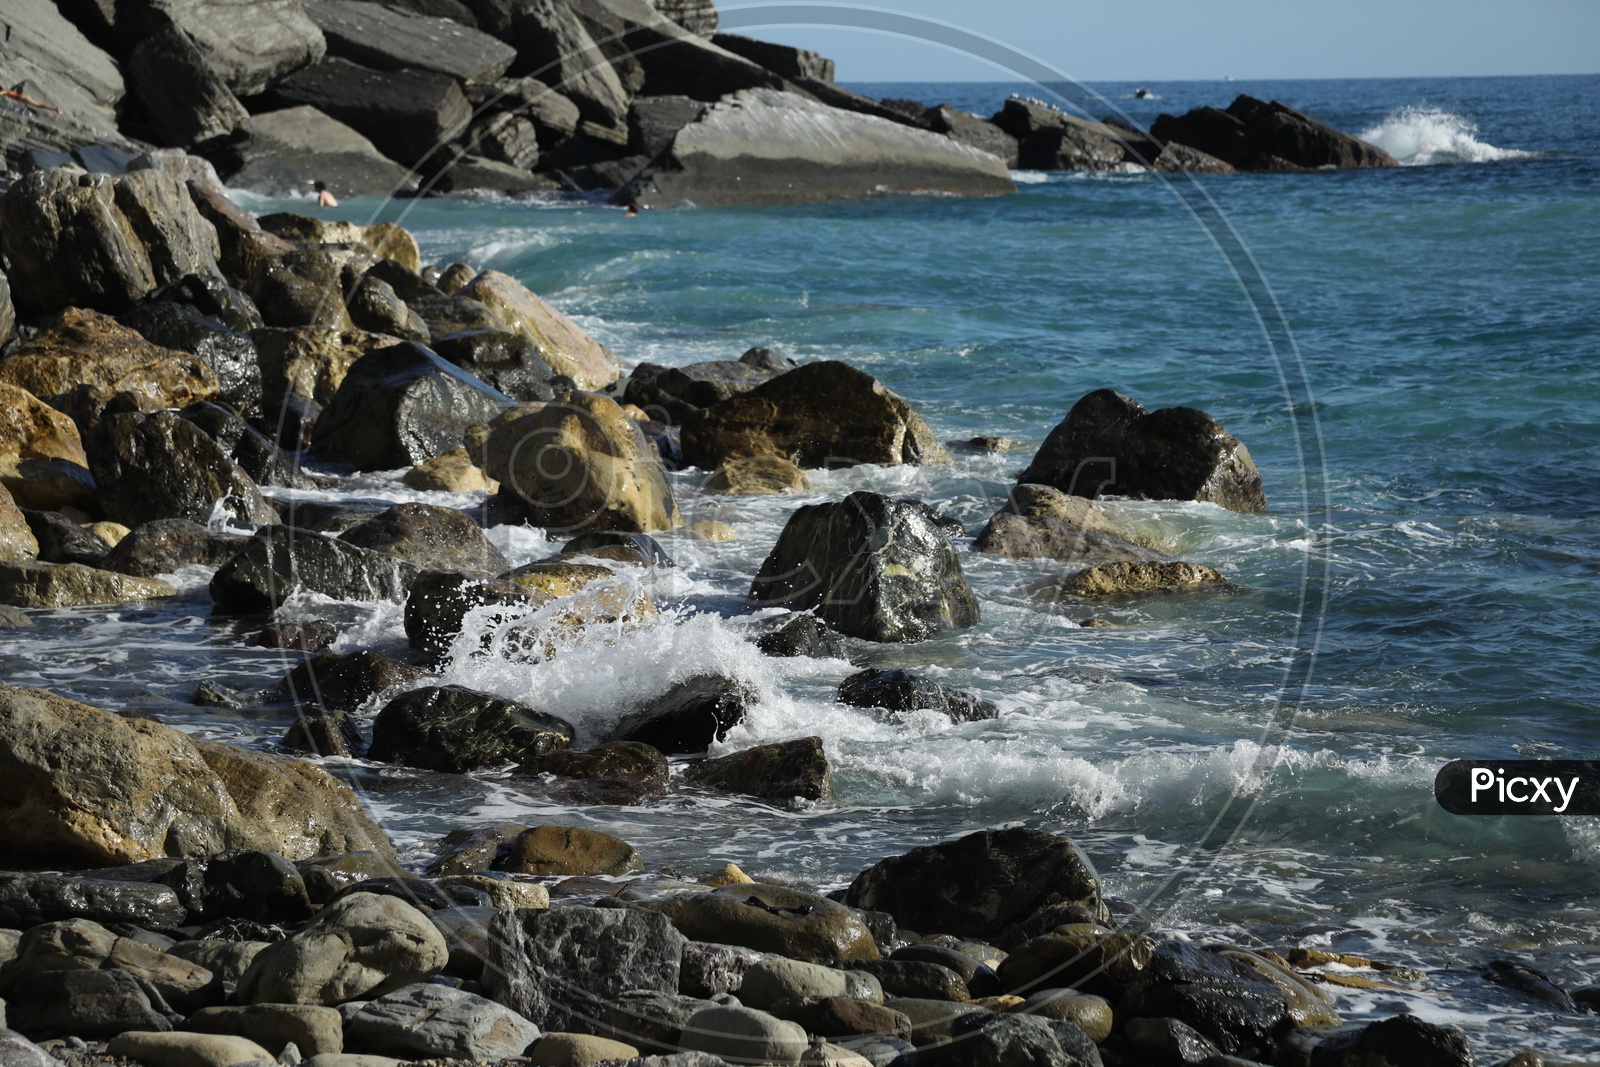 Sea / Ocean Waves Striking Rocks In a Beach